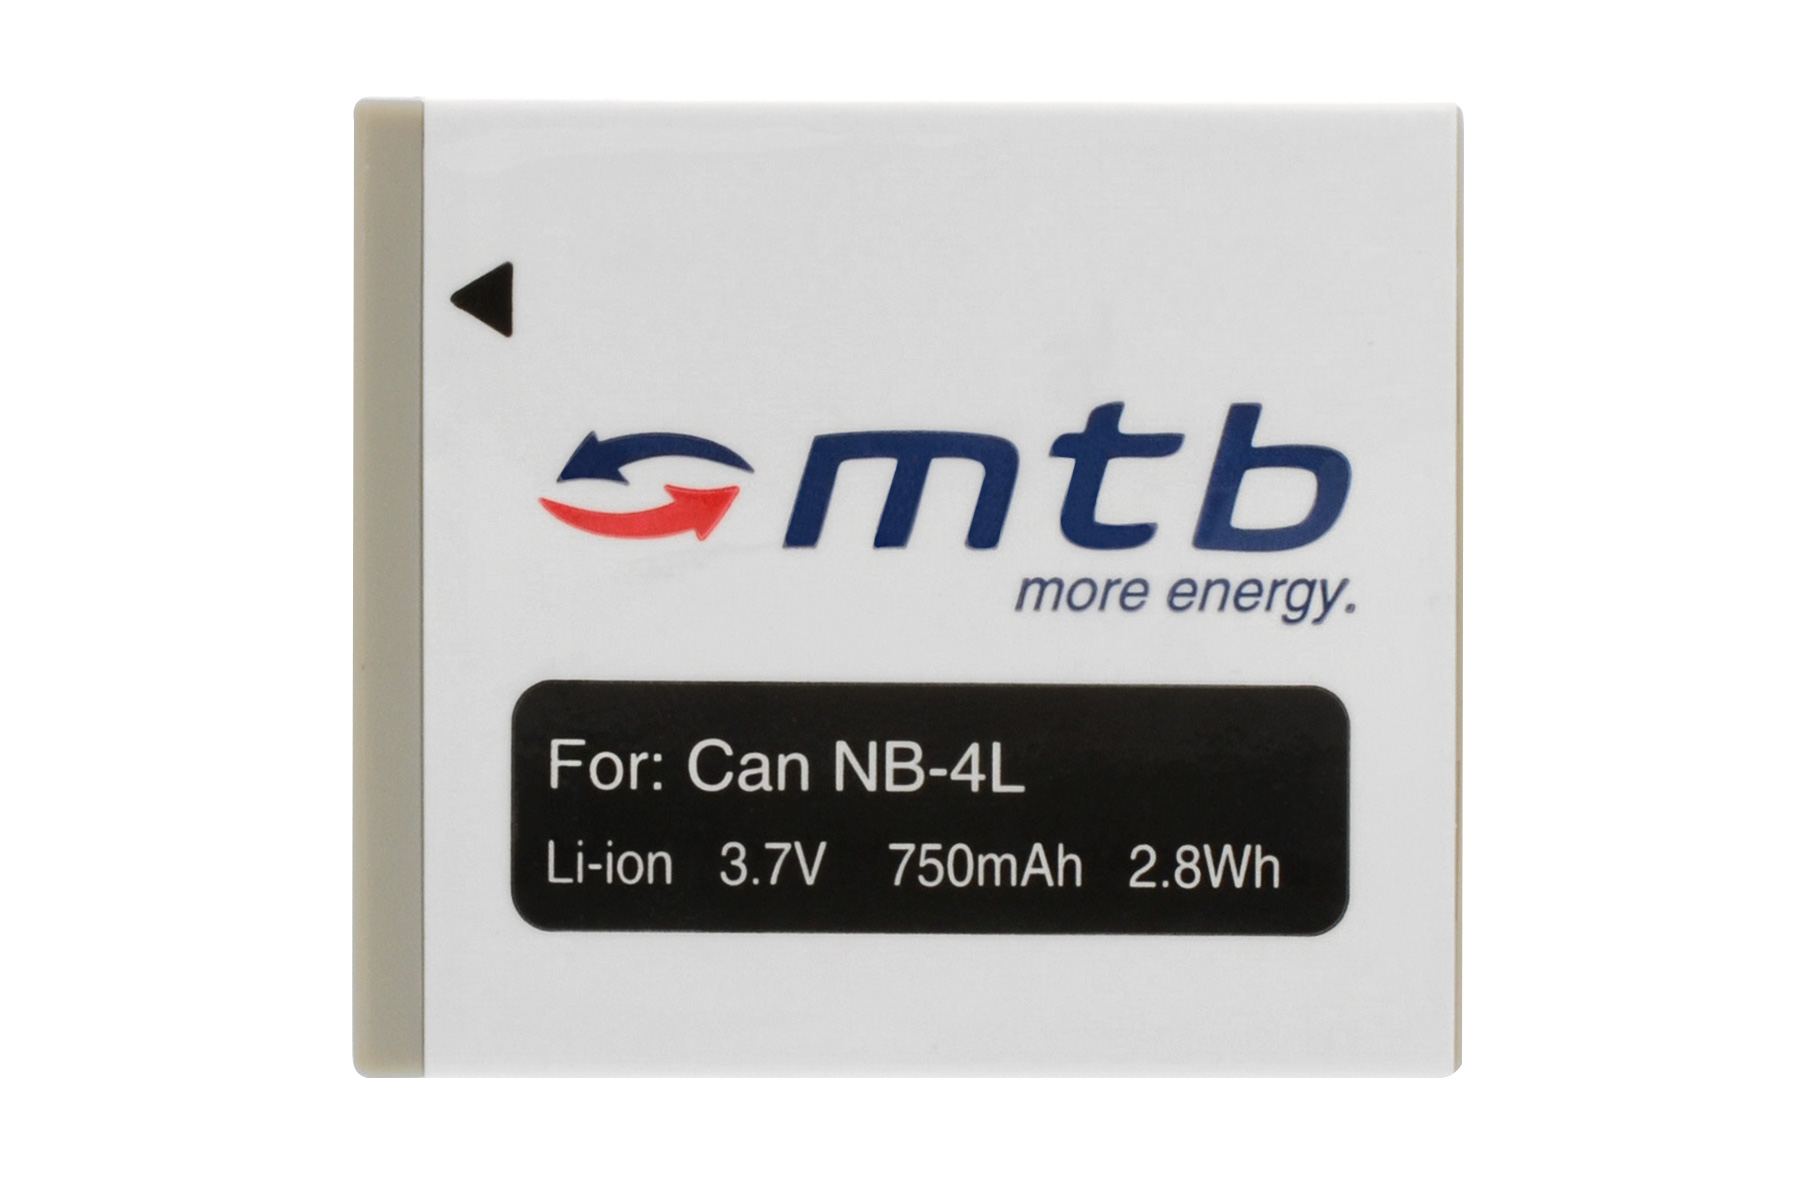 MTB MORE ENERGY BAT-001 NB-4L Li-Ion, 750 mAh Akku